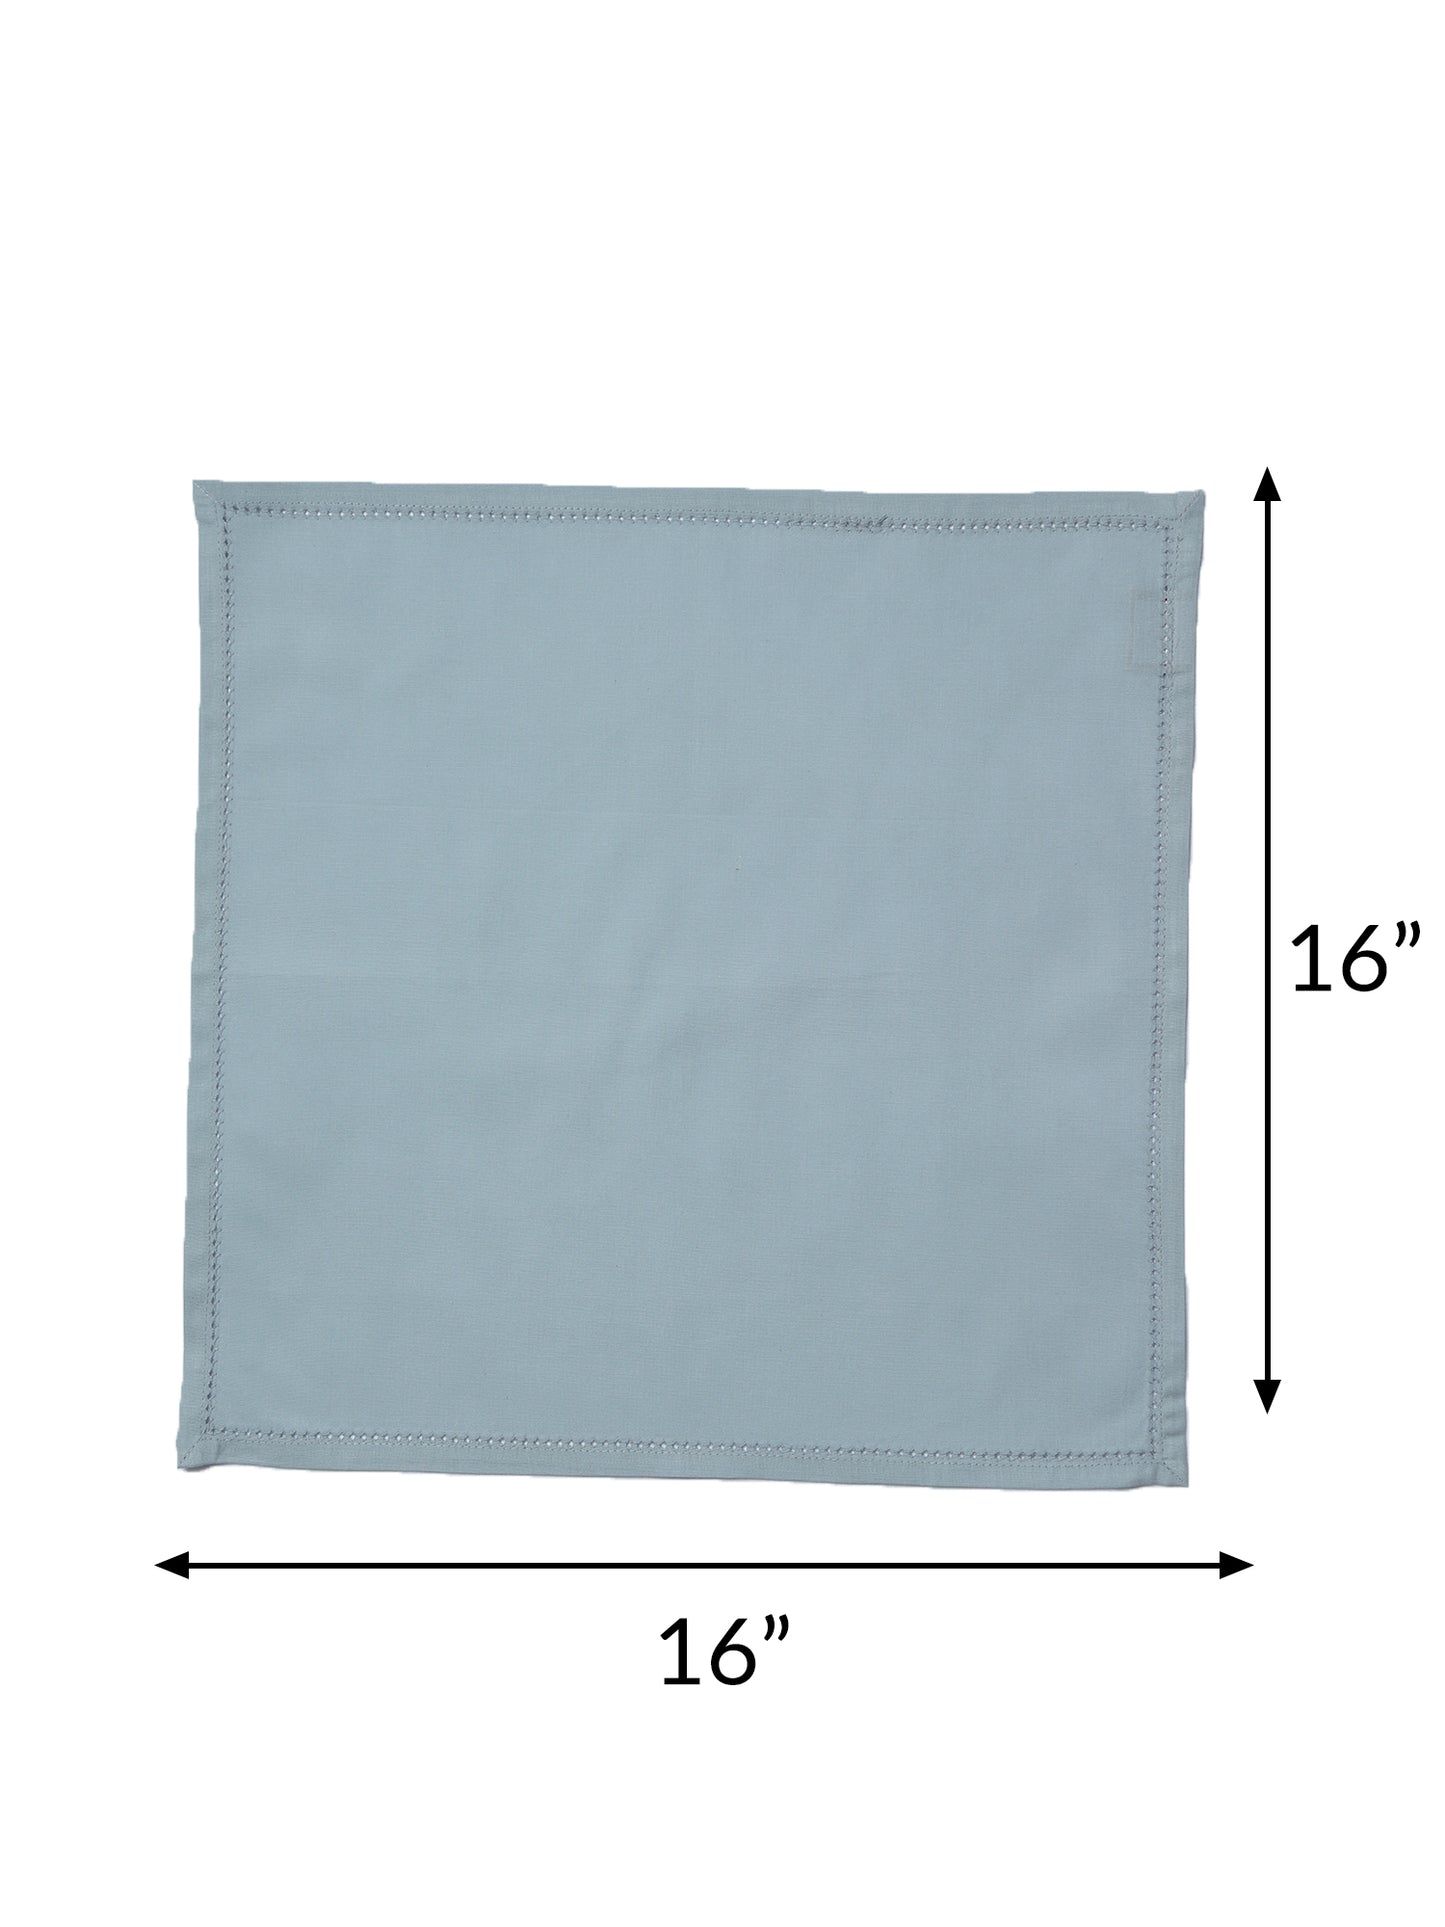 fagotting embroidered set of 6 dinner napkins in blue color - 16x16 inch